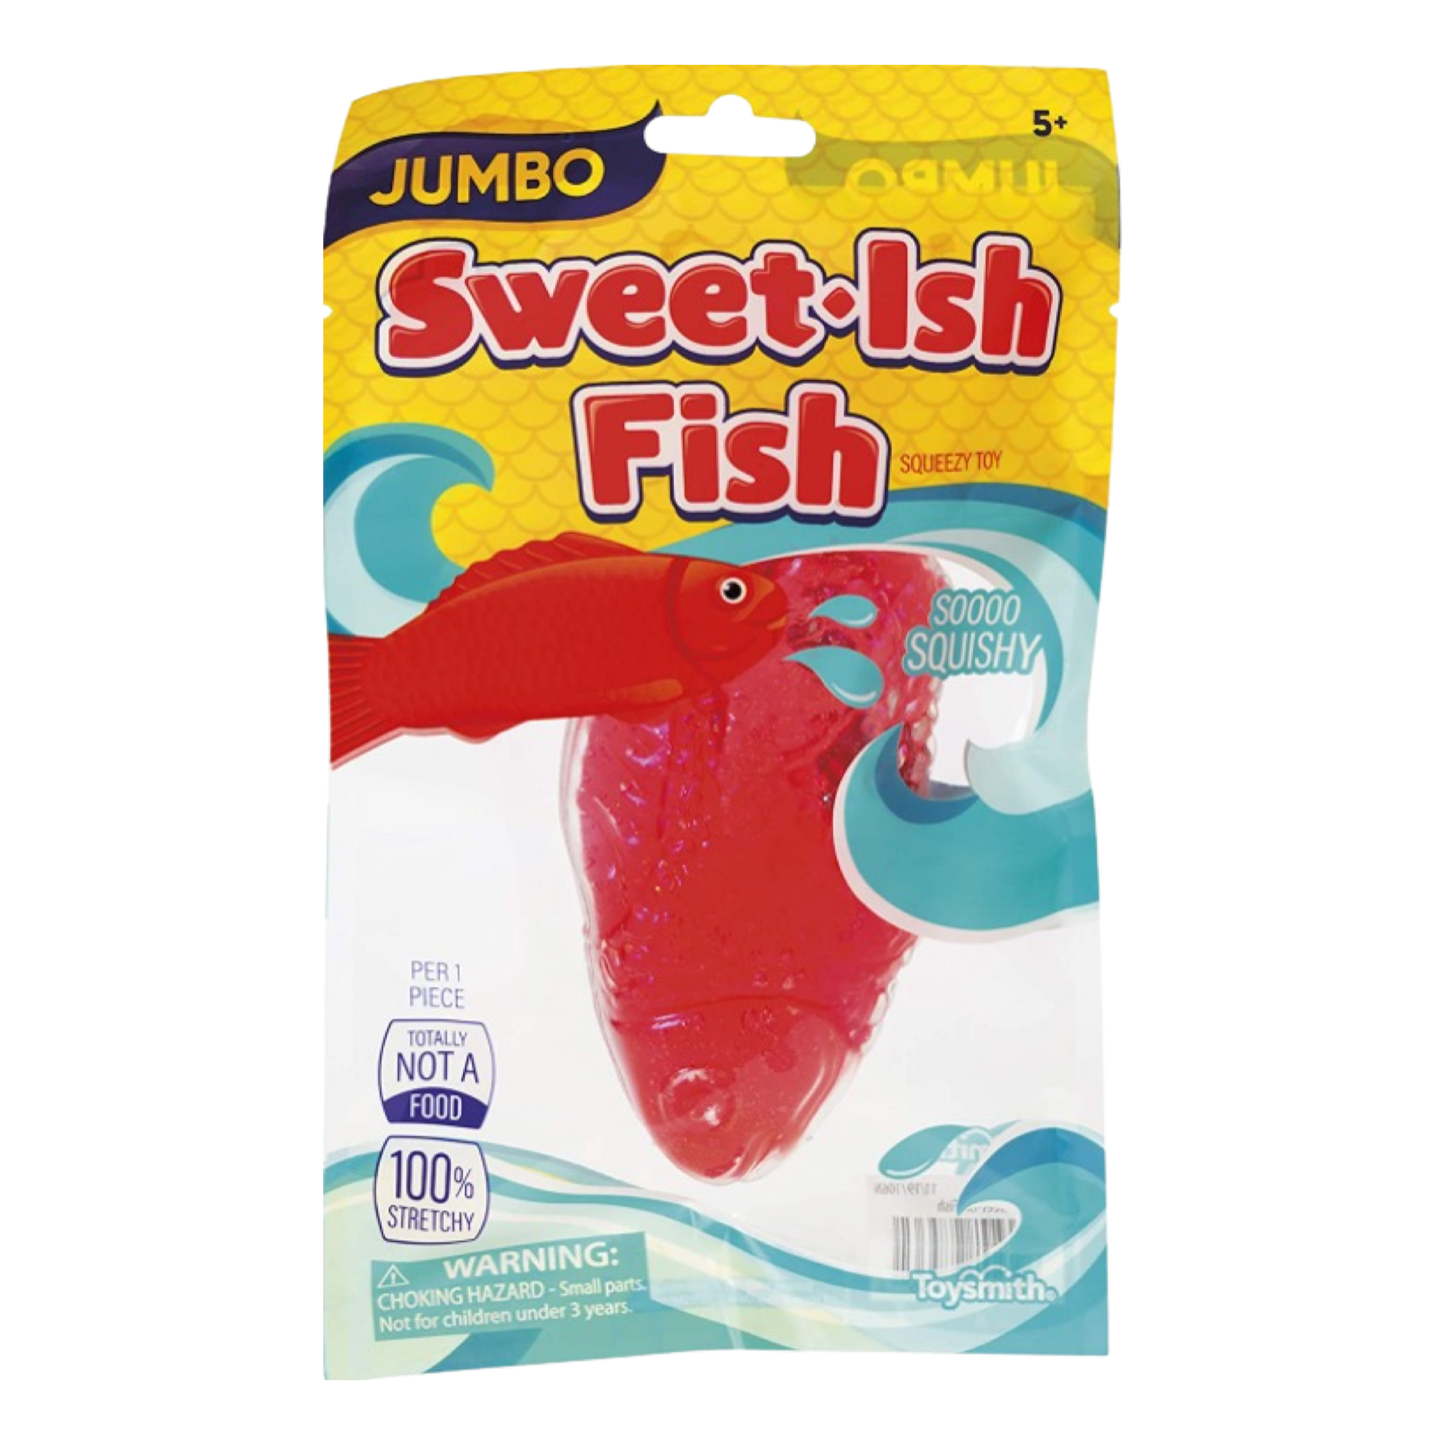 Jumbo Sweet-Ish Fish